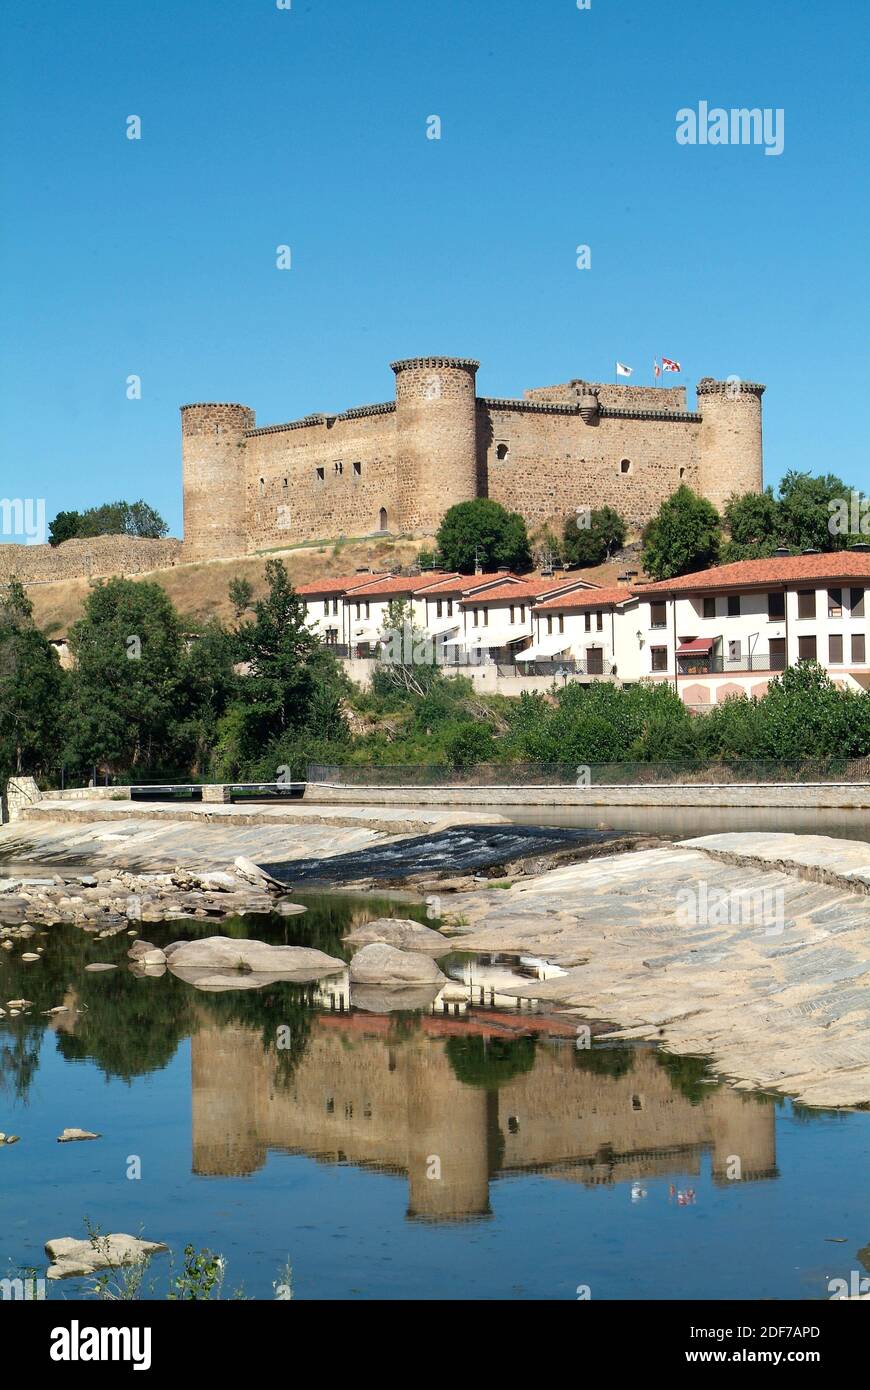 El Barco de Avila, town, castle and Tormes River. Avila province, Castilla y Leon, Spain. Stock Photo